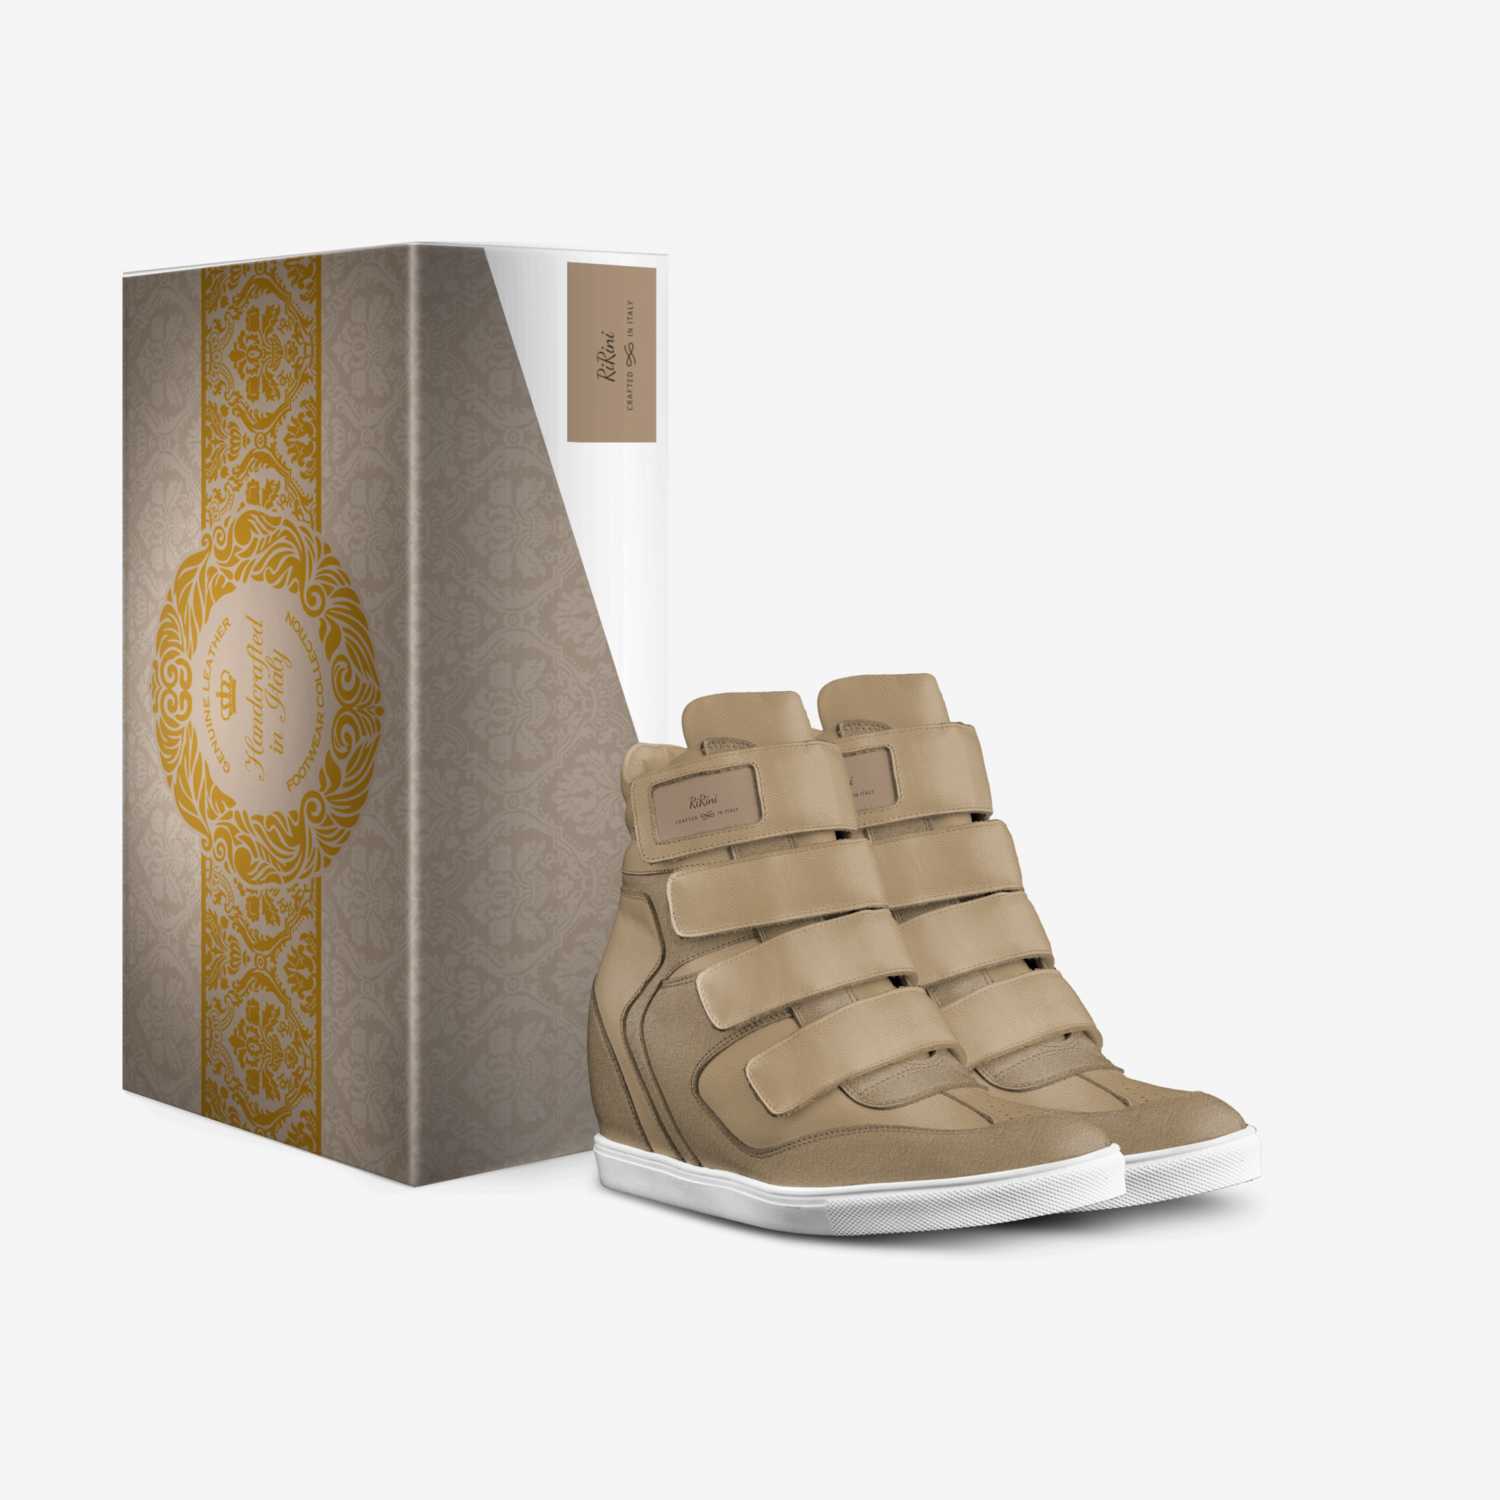 RiRini  custom made in Italy shoes by Ririni | Box view